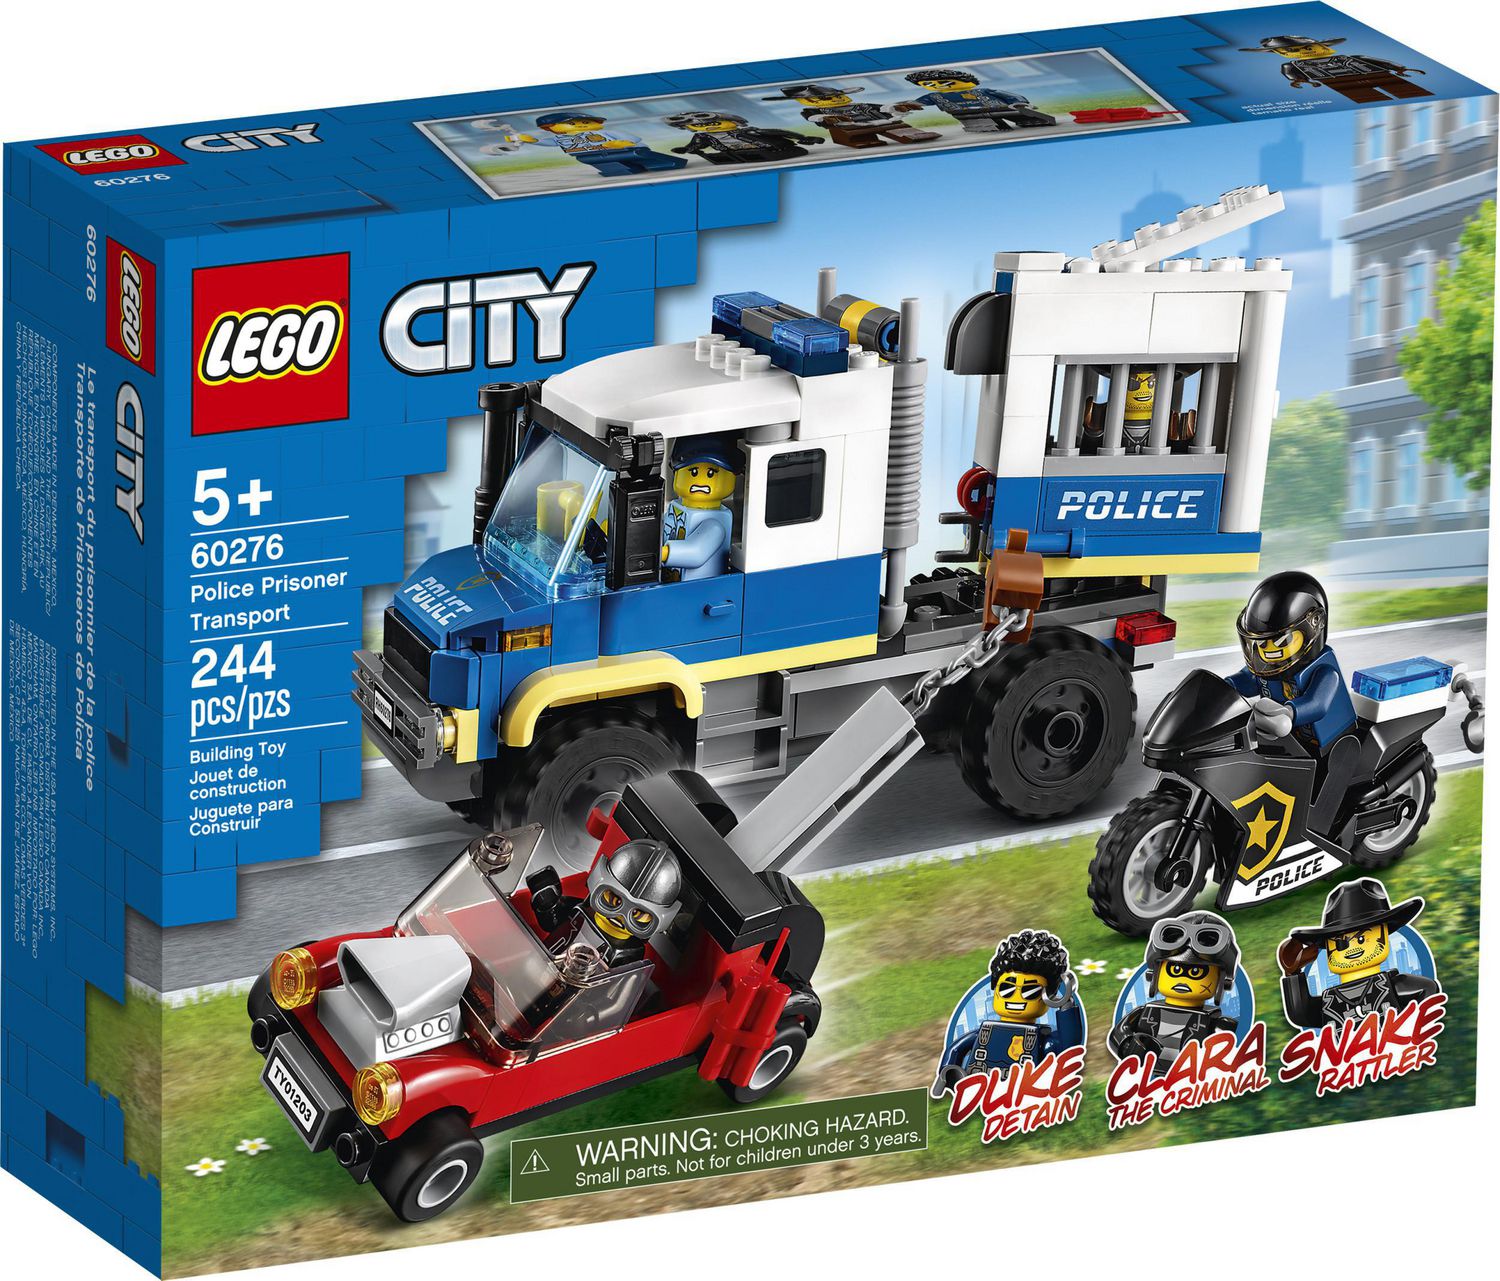 LEGO City Police Prisoner Transport 60276 Toy Building Kit (244 Pieces)